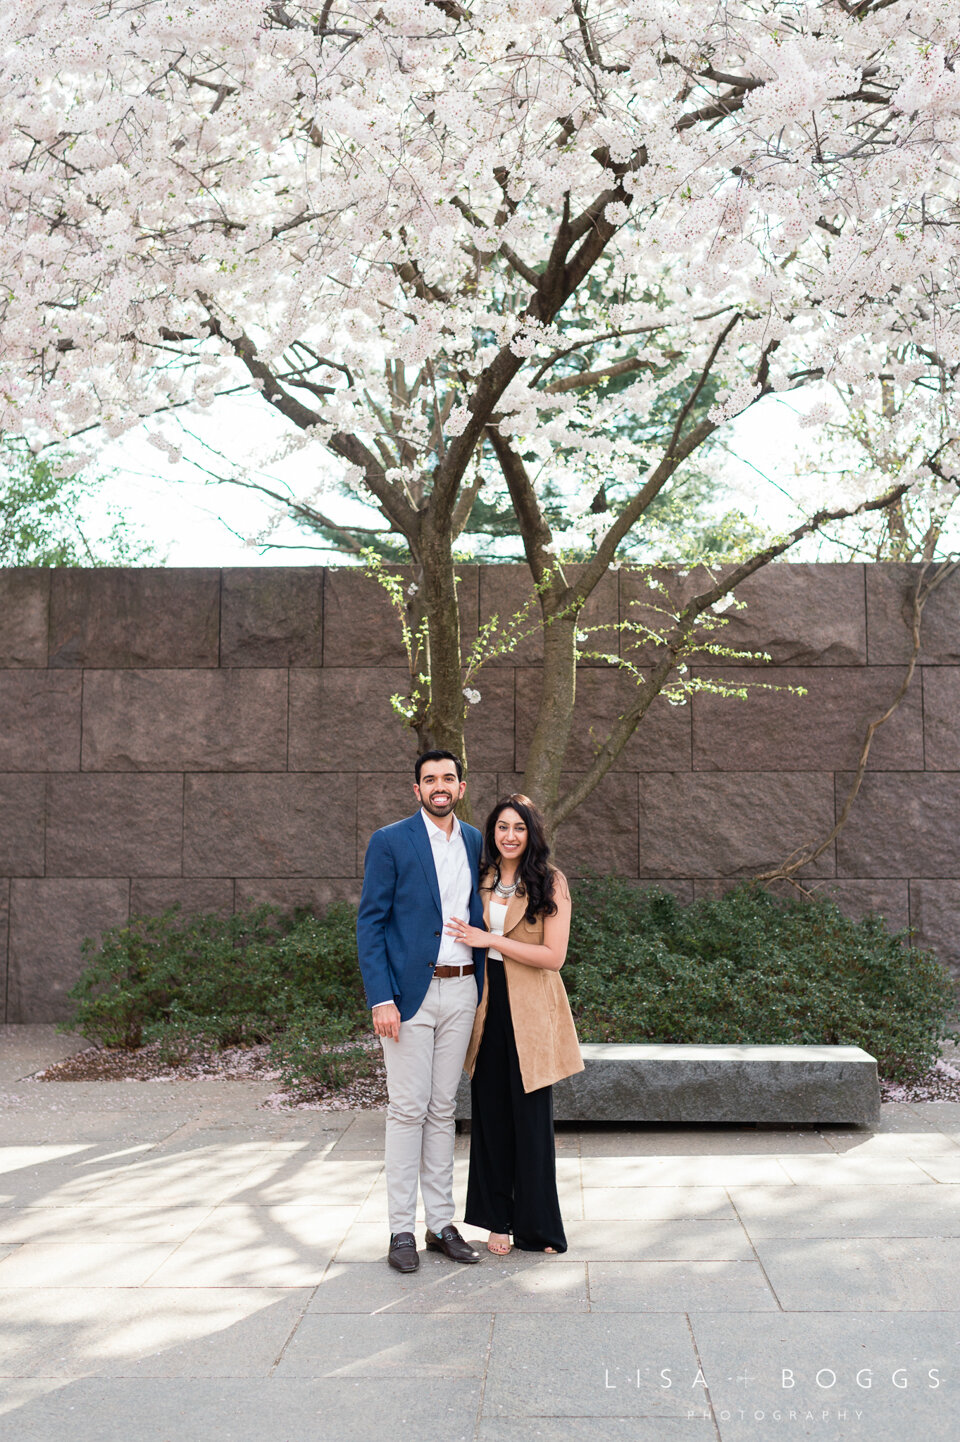 a&k-dc-cherry-blossom-proposal-engagement-photos-washington-dc-cherry-blossoms-06.jpg